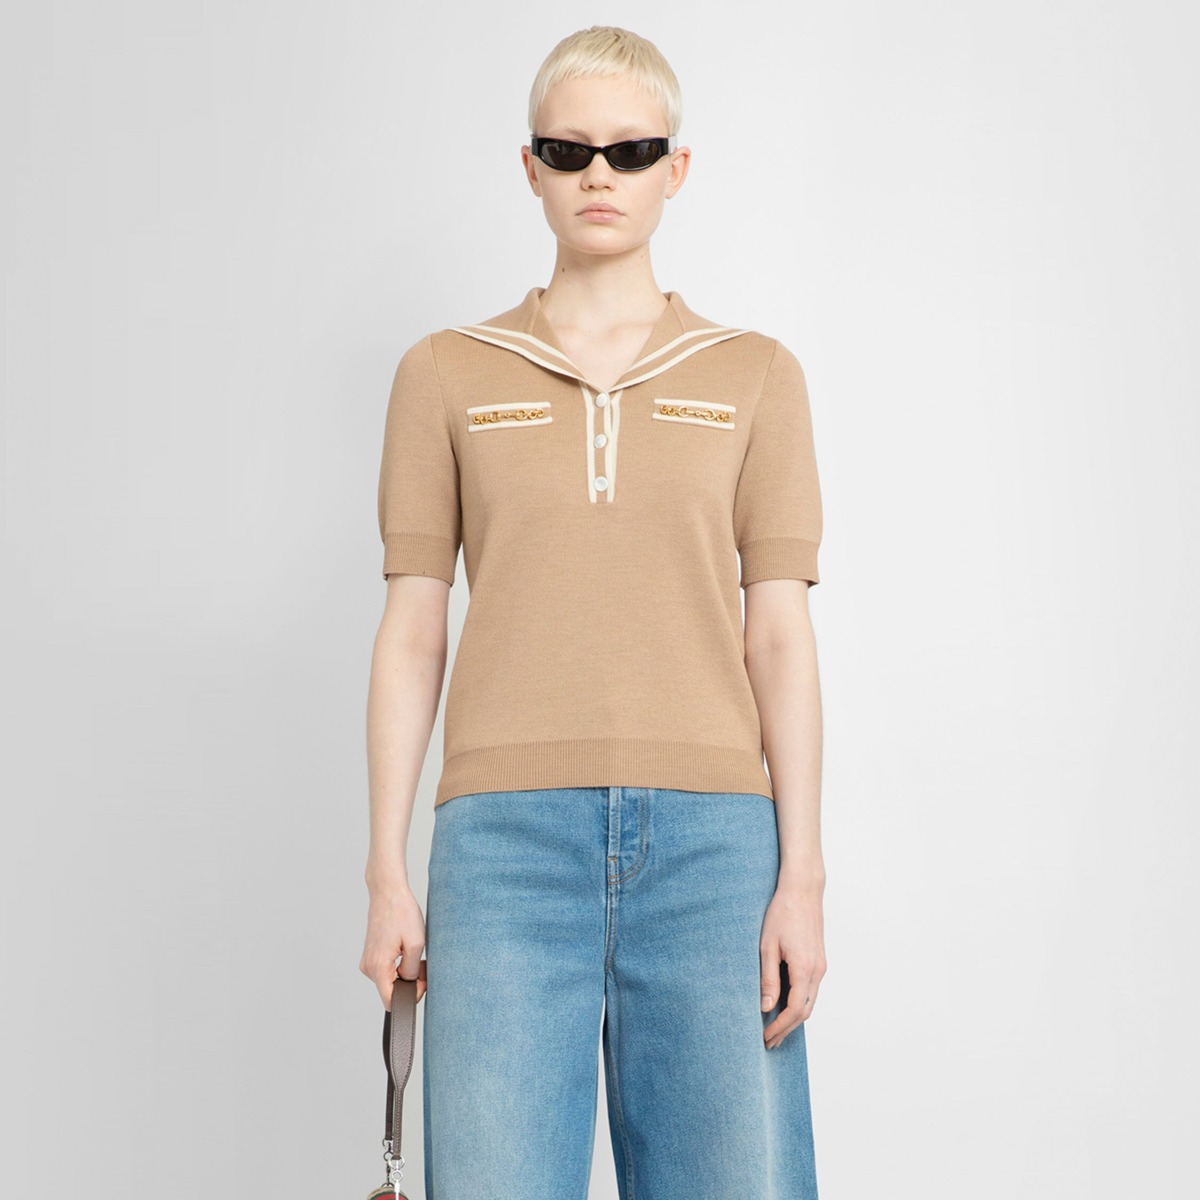 Gucci Women T-Shirt Beige by Antonioli GOOFASH